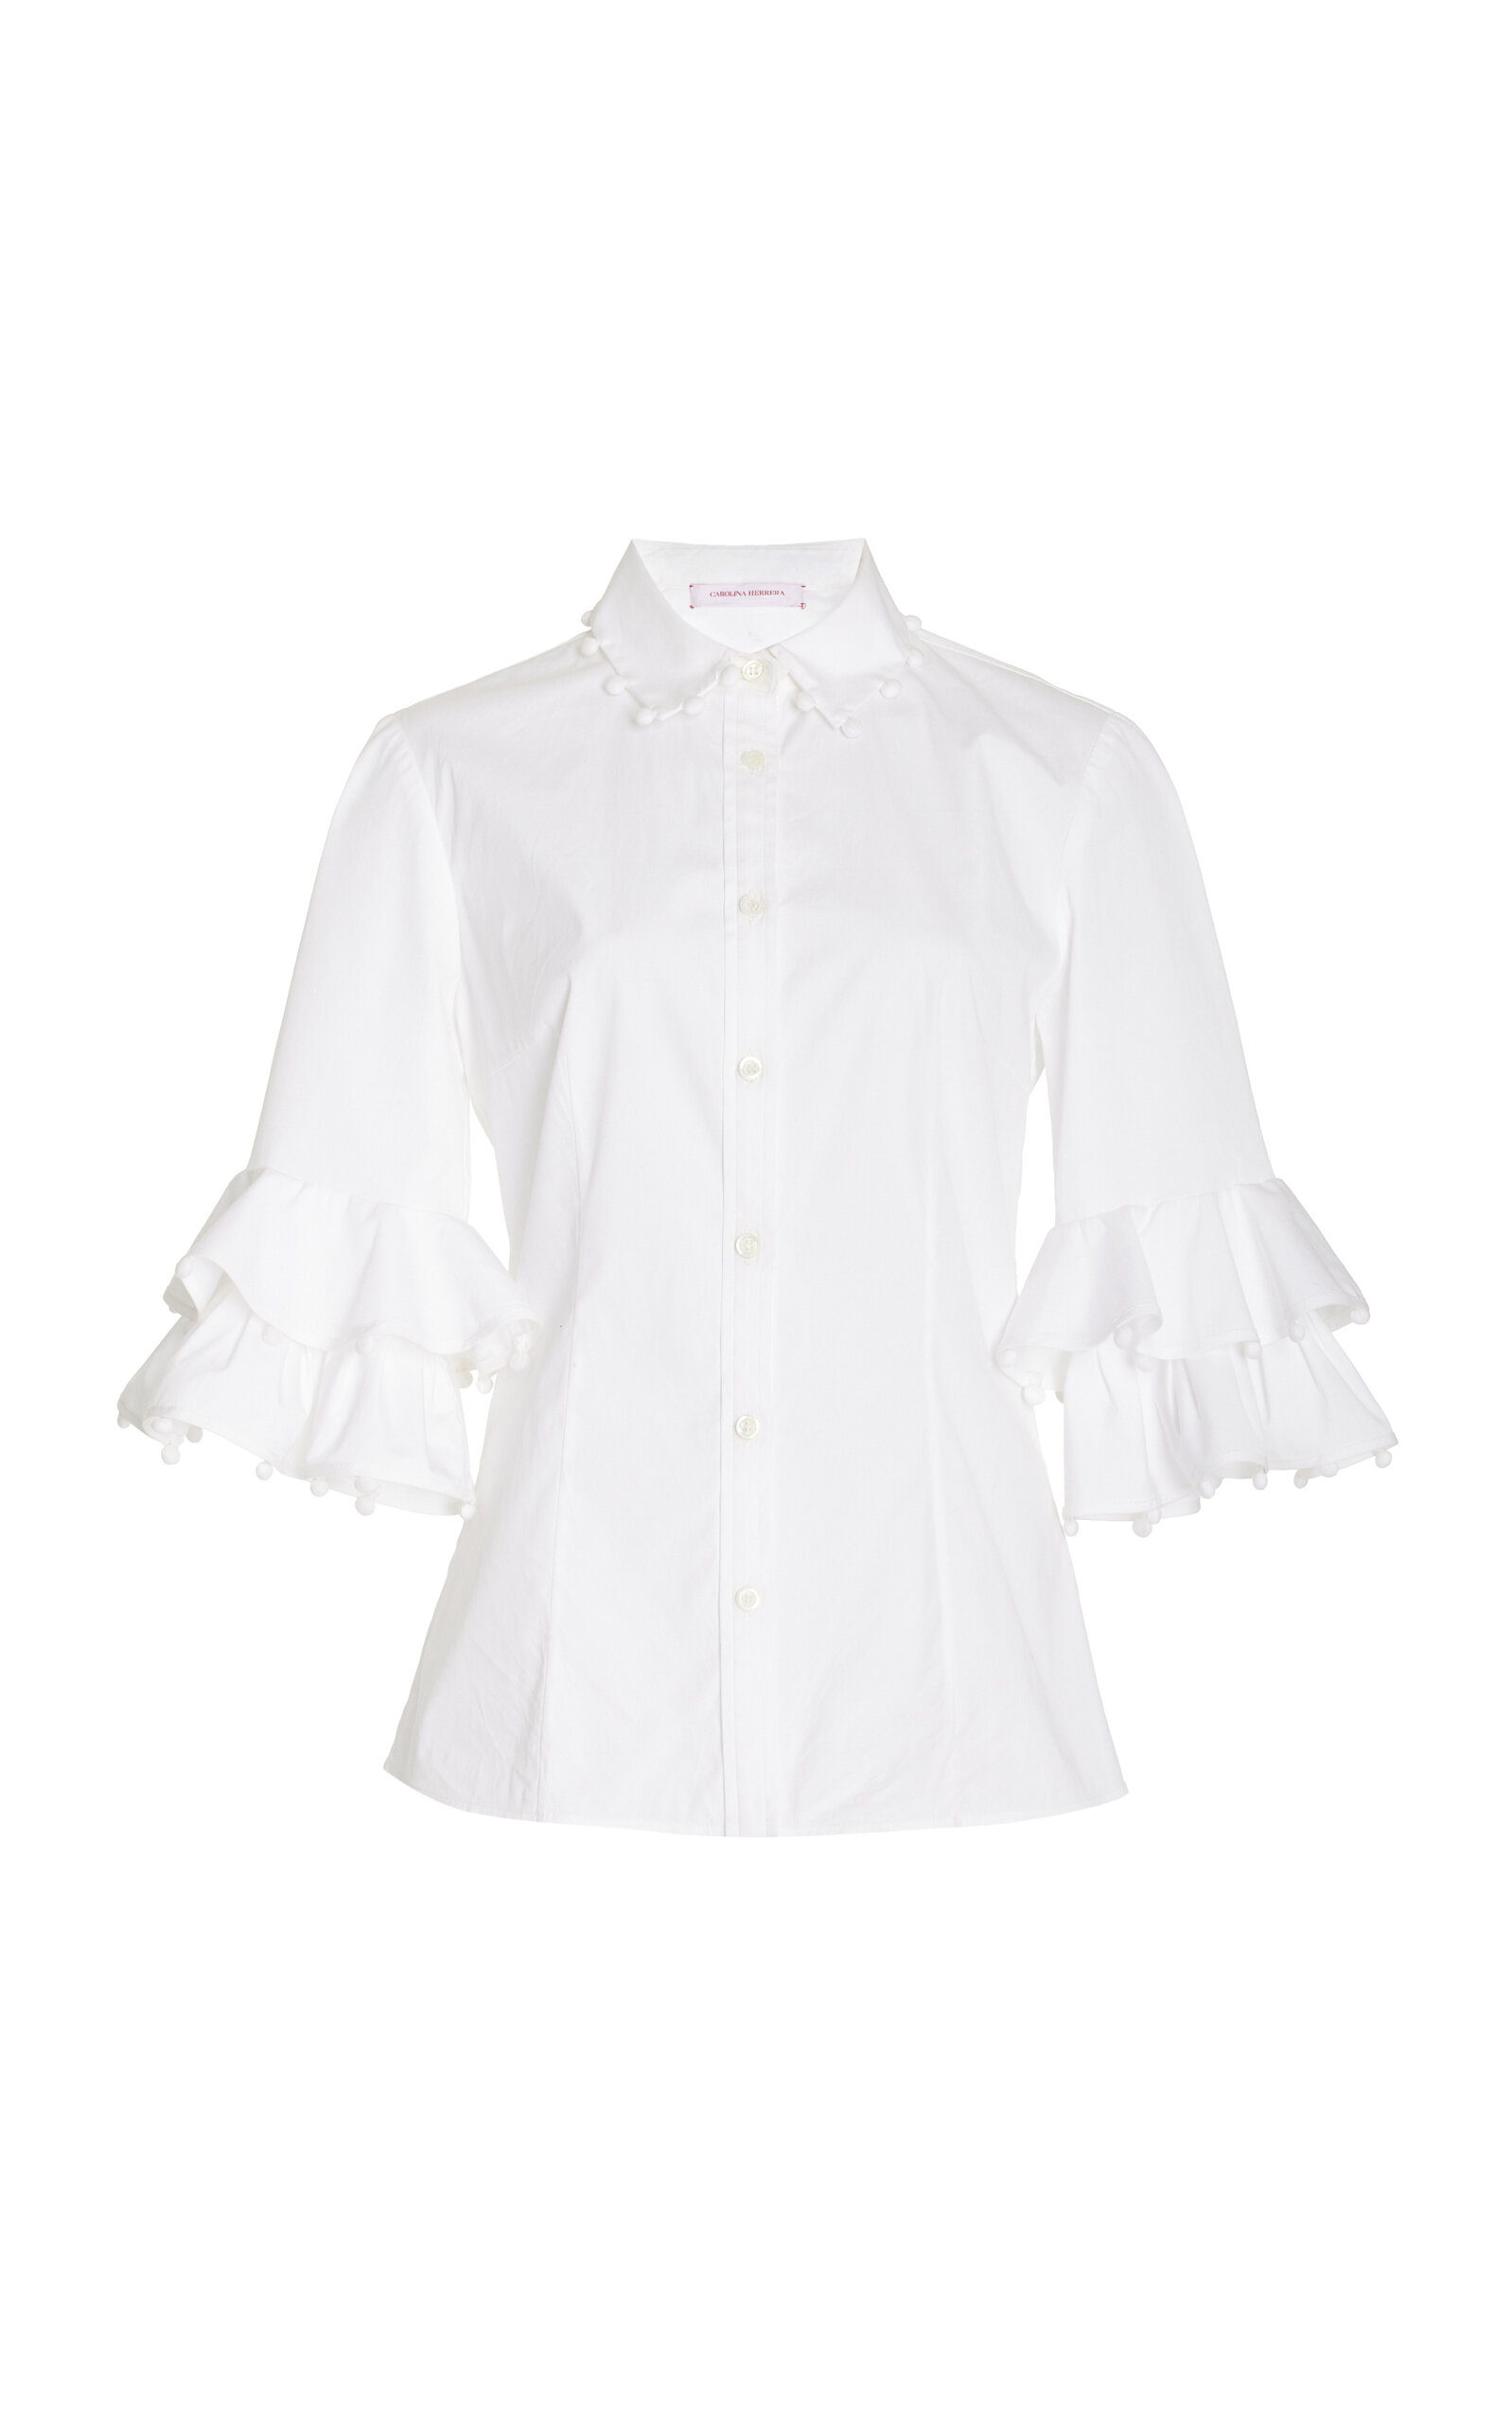 Carolina Herrera - Embroidered Ruffled Stretch-Cotton Blouse - White - US 2 - Moda Operandi